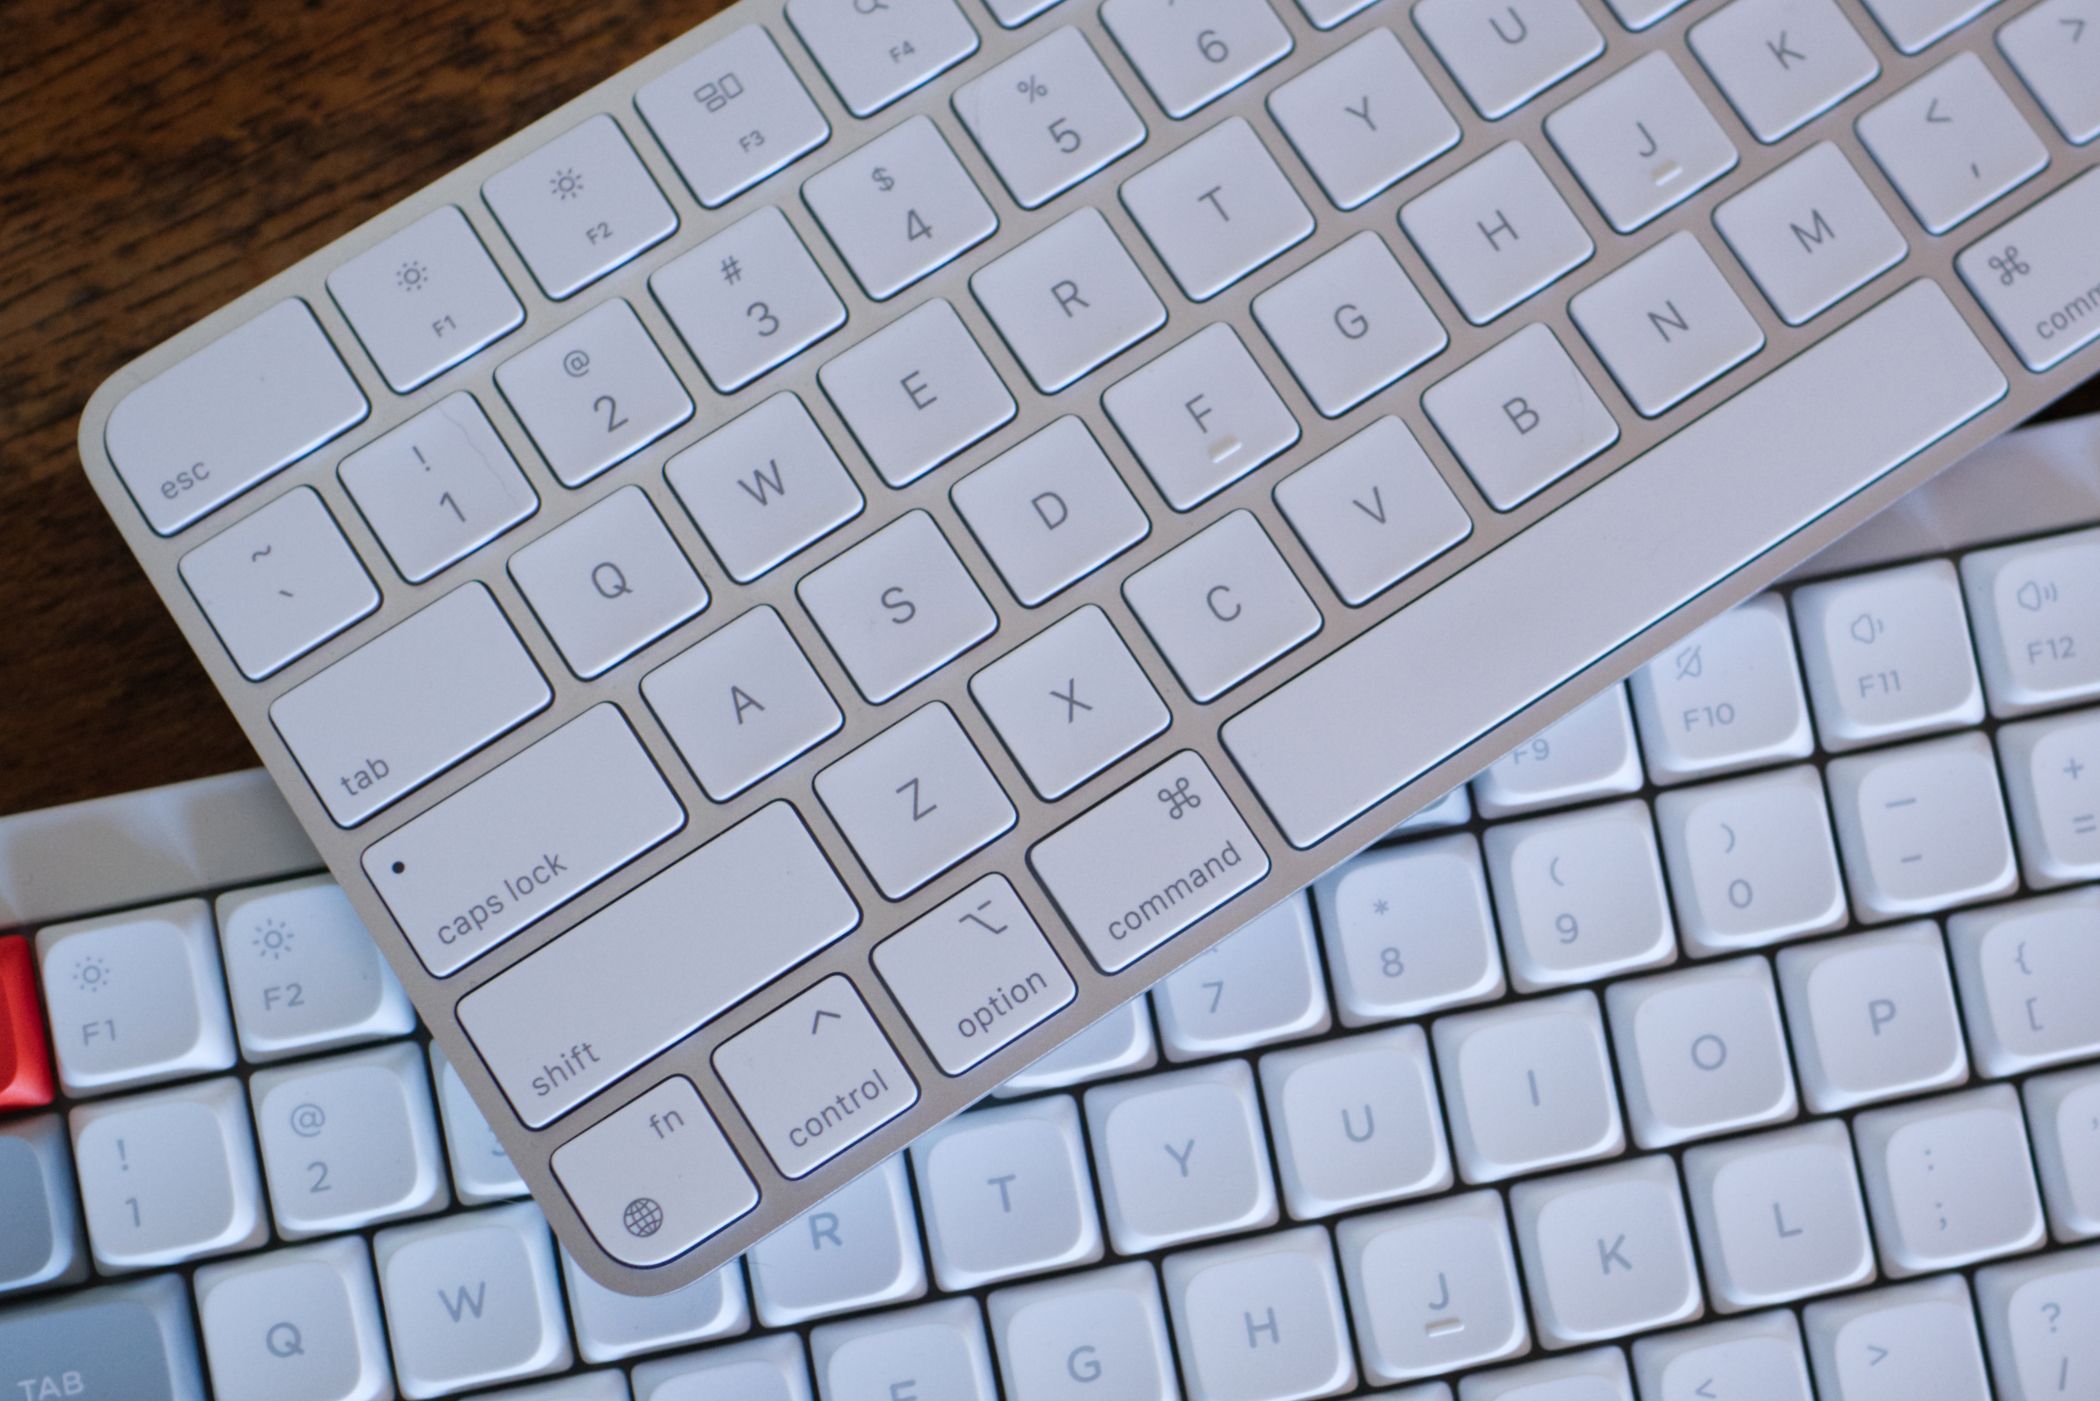 Apple Magic Keyboard and the NuPhy Air75 mechanical keyboard.